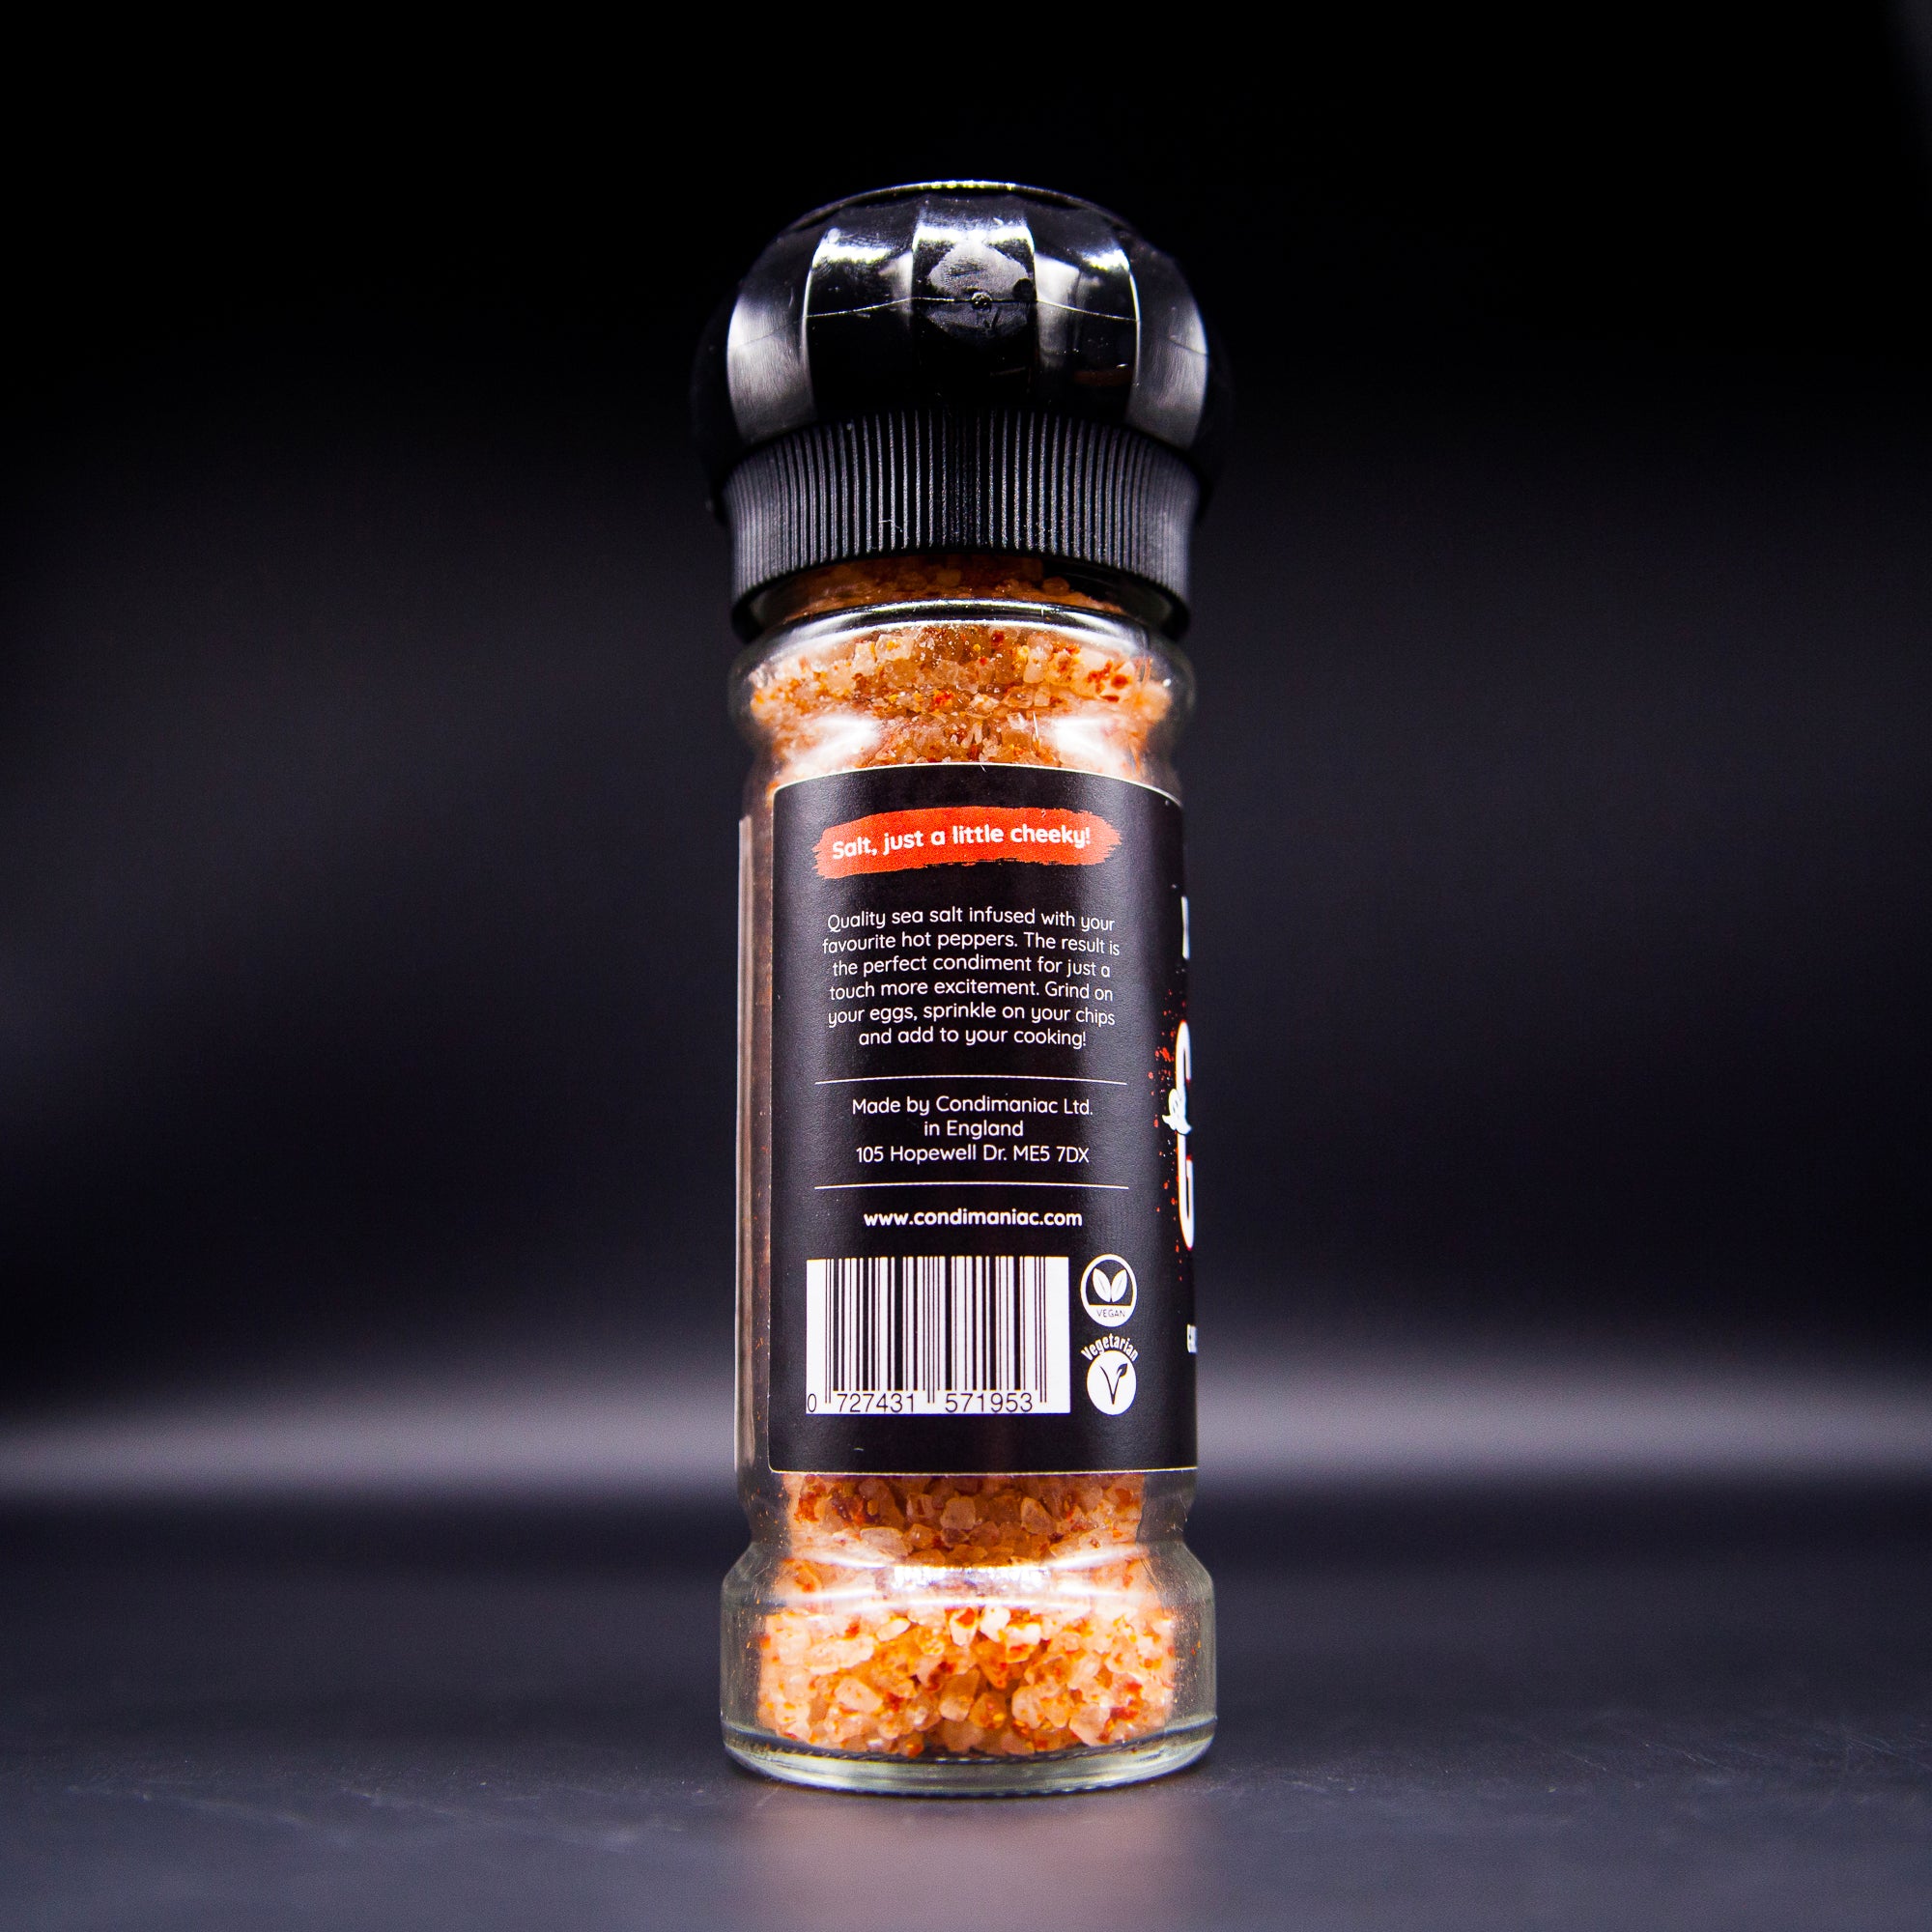 Condimaniac's 'Cheeky Salts' Ghost Pepper Infused Salt